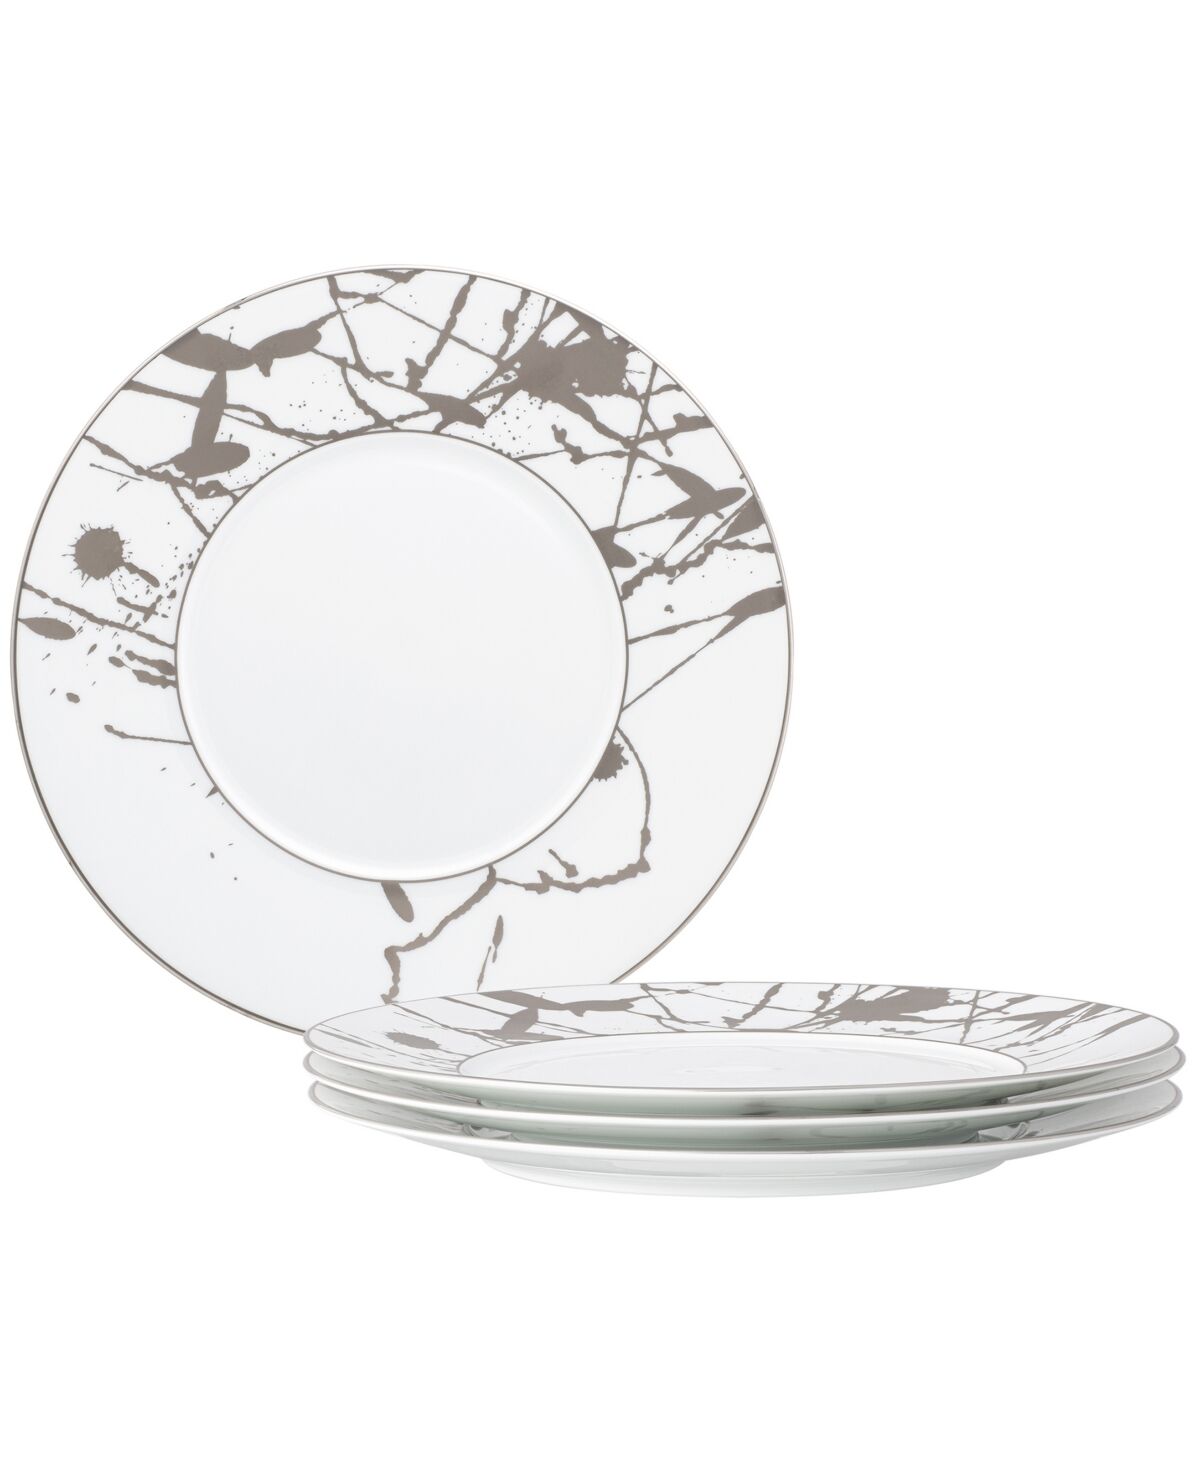 Noritake Raptures Platinum Set of 4 Dinner Plates, Service For 4 - White Platinum